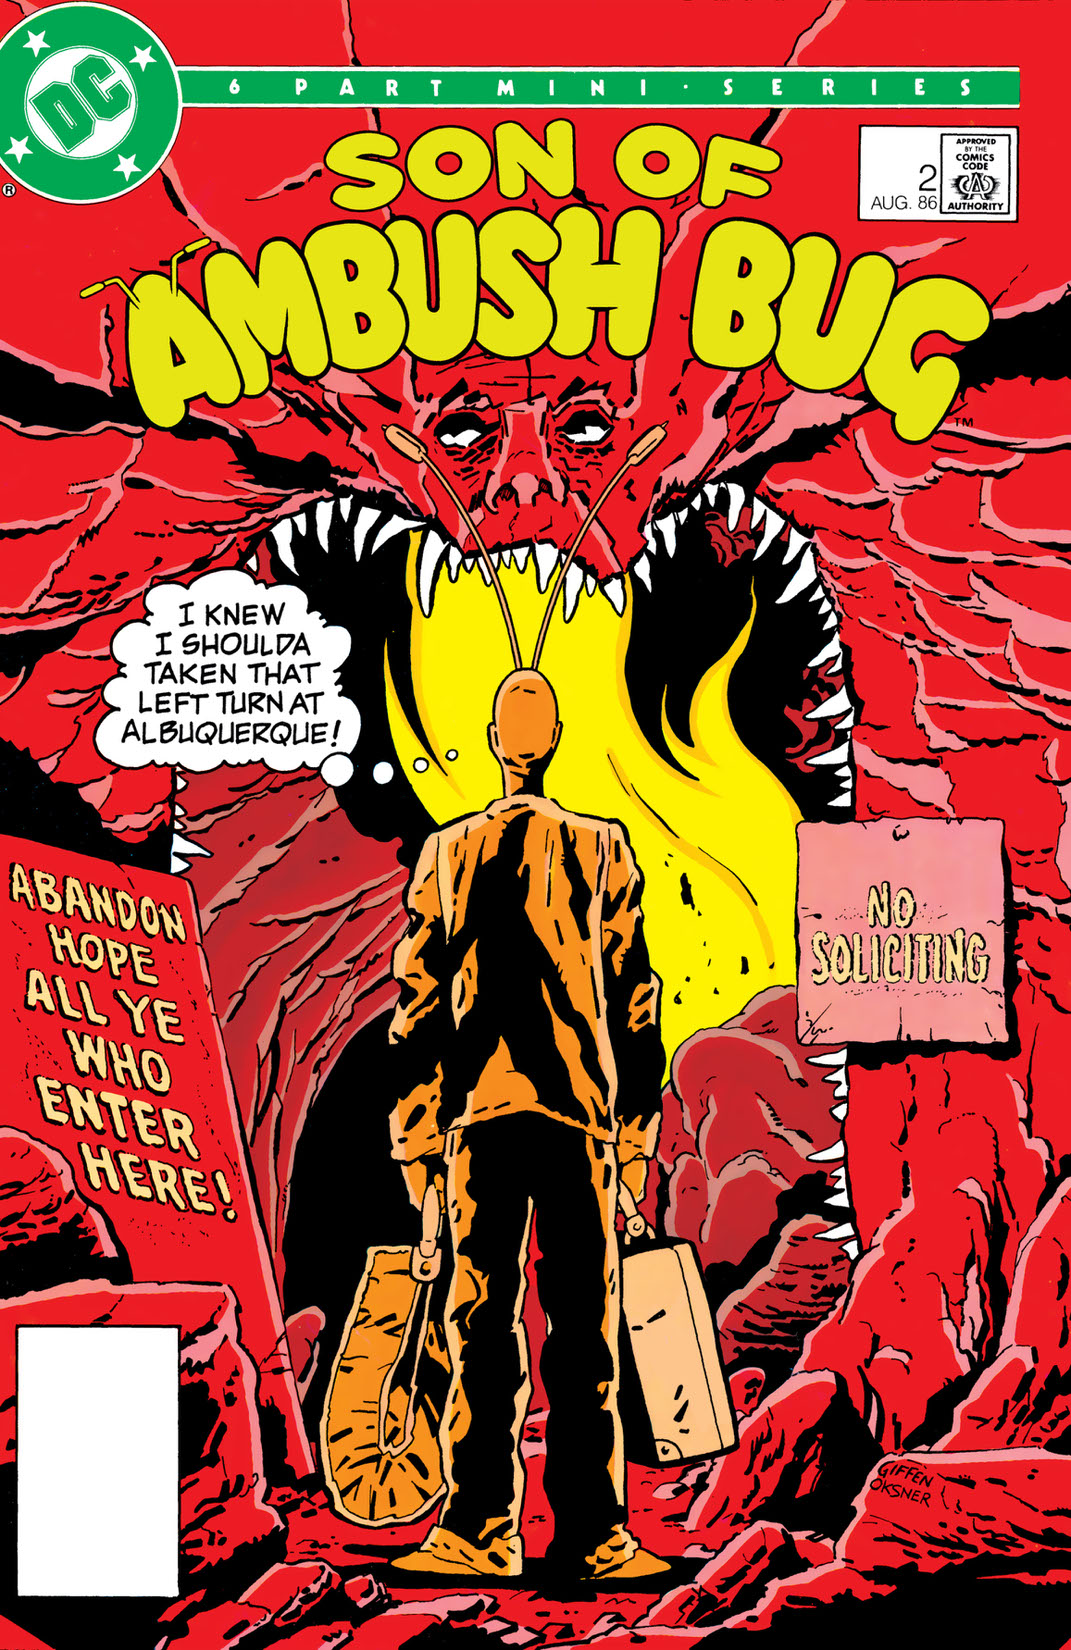 Son of Ambush Bug #2 preview images